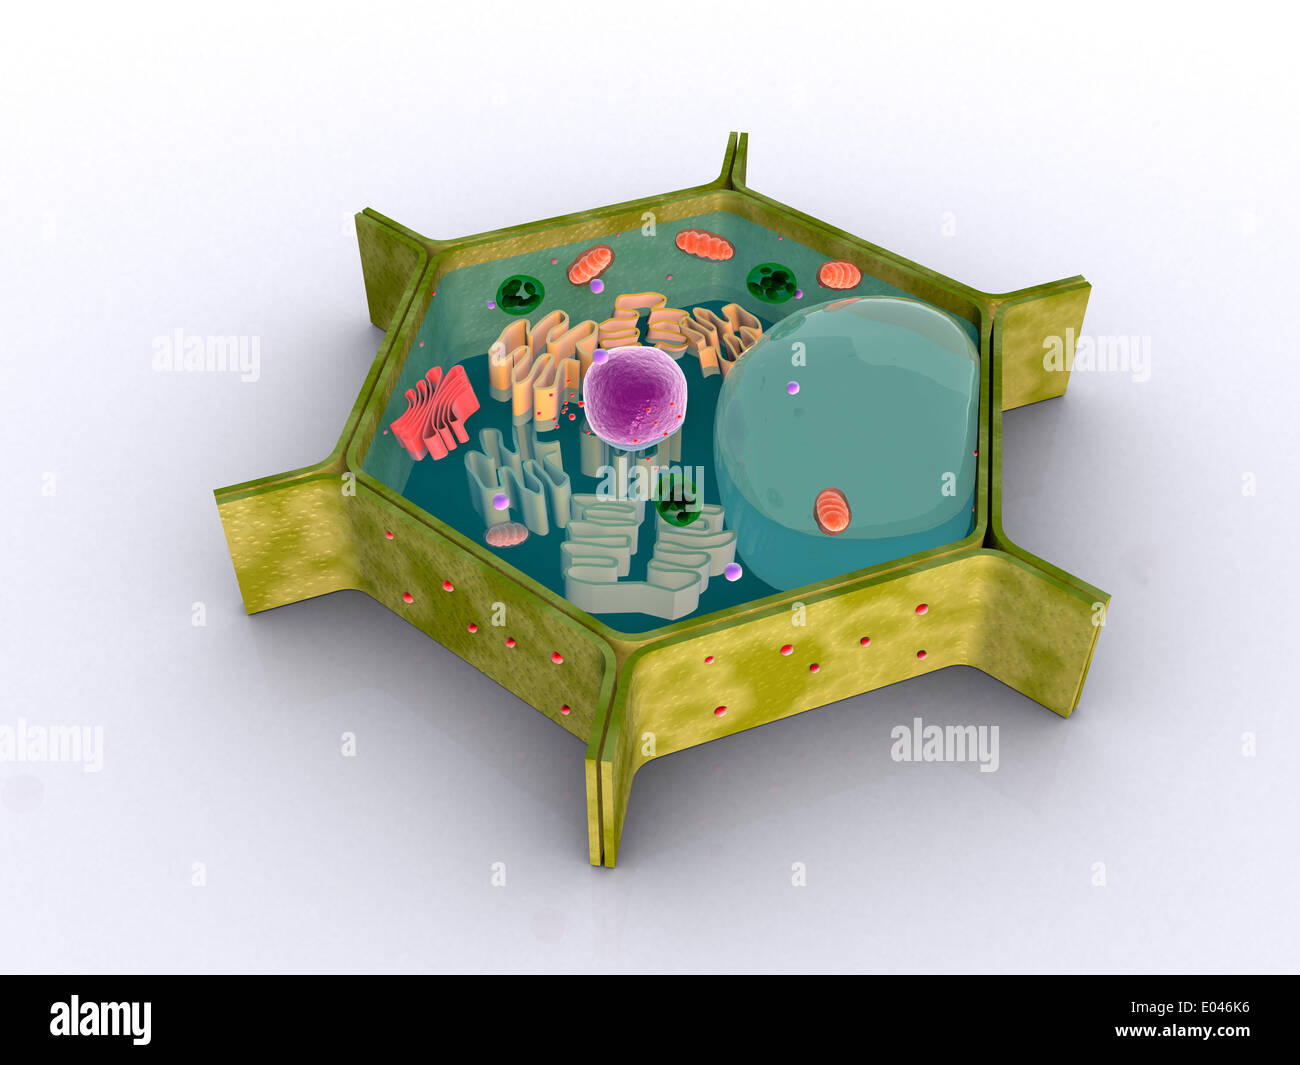 Imagen conceptual de una célula vegetal y sus componentes. Foto de stock